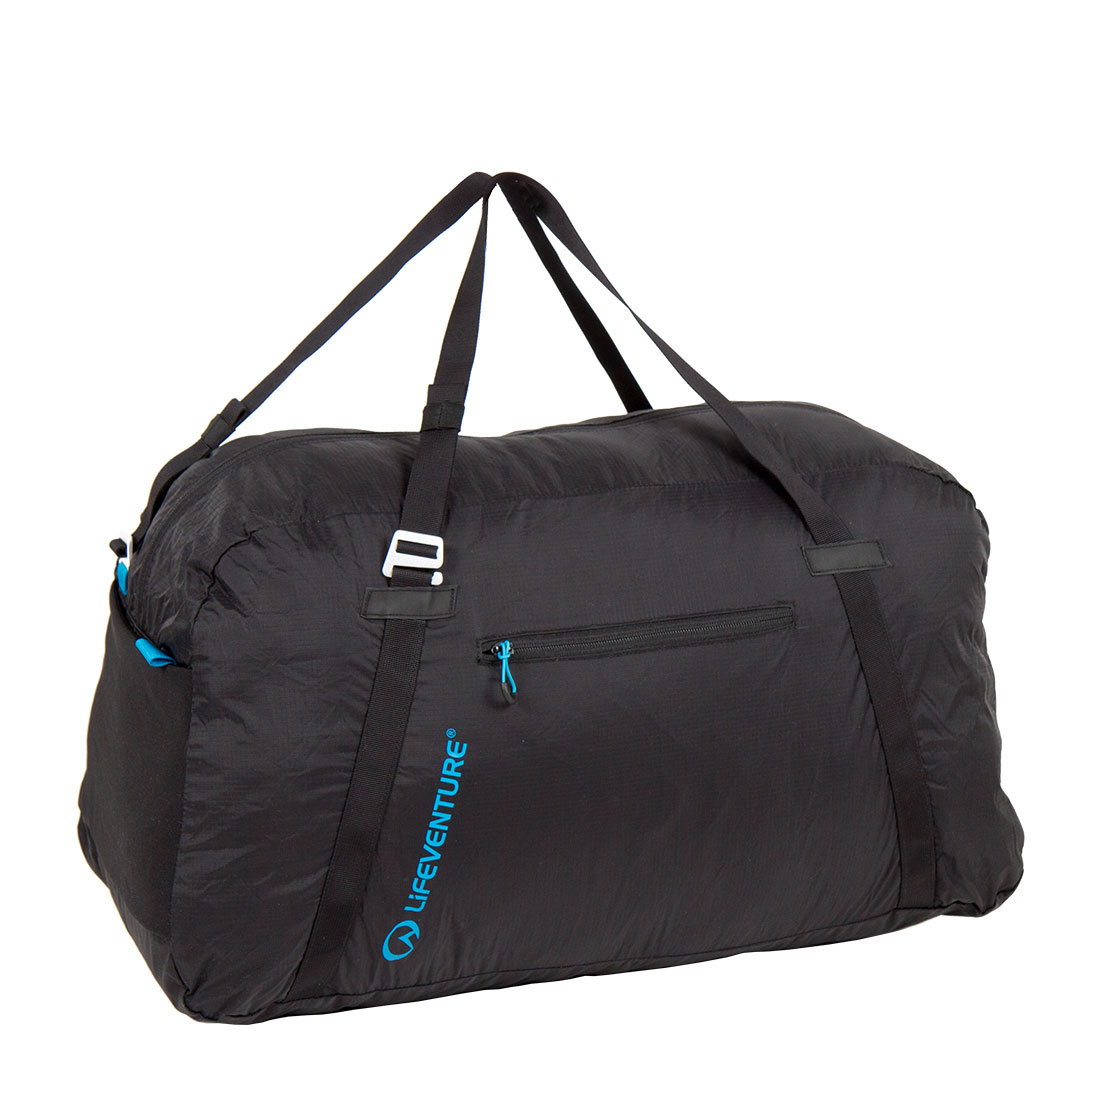 Lifeventure taška Packable Duffle Bag 70l